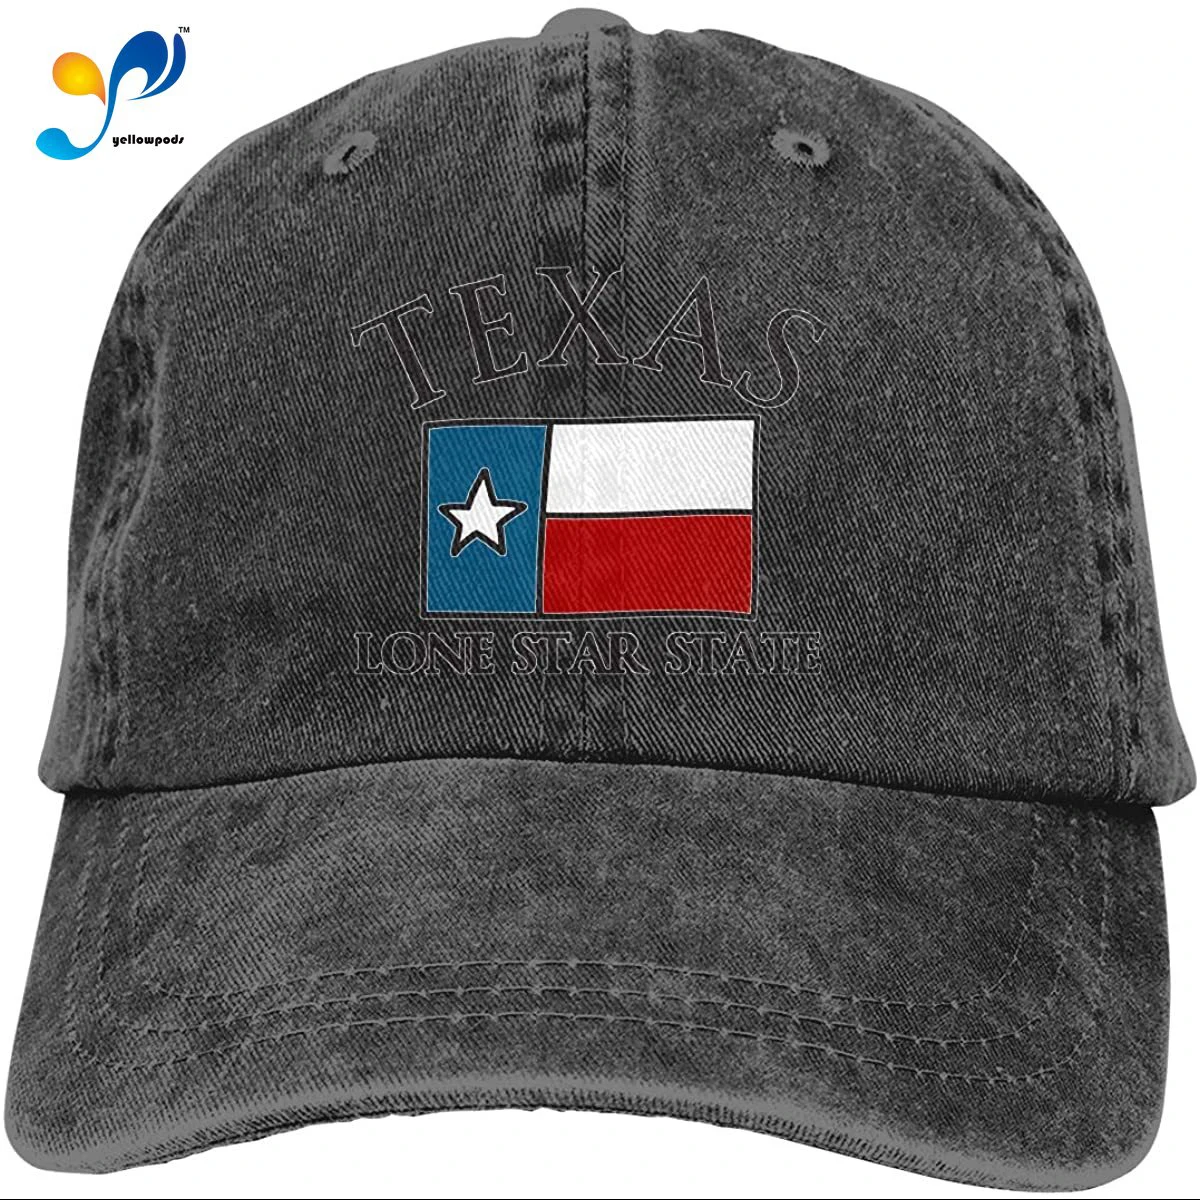 

Texas Lone Star State Unisex Adult Adjustable Denim Cowboy Hat Casquette Sombrero De Mujer